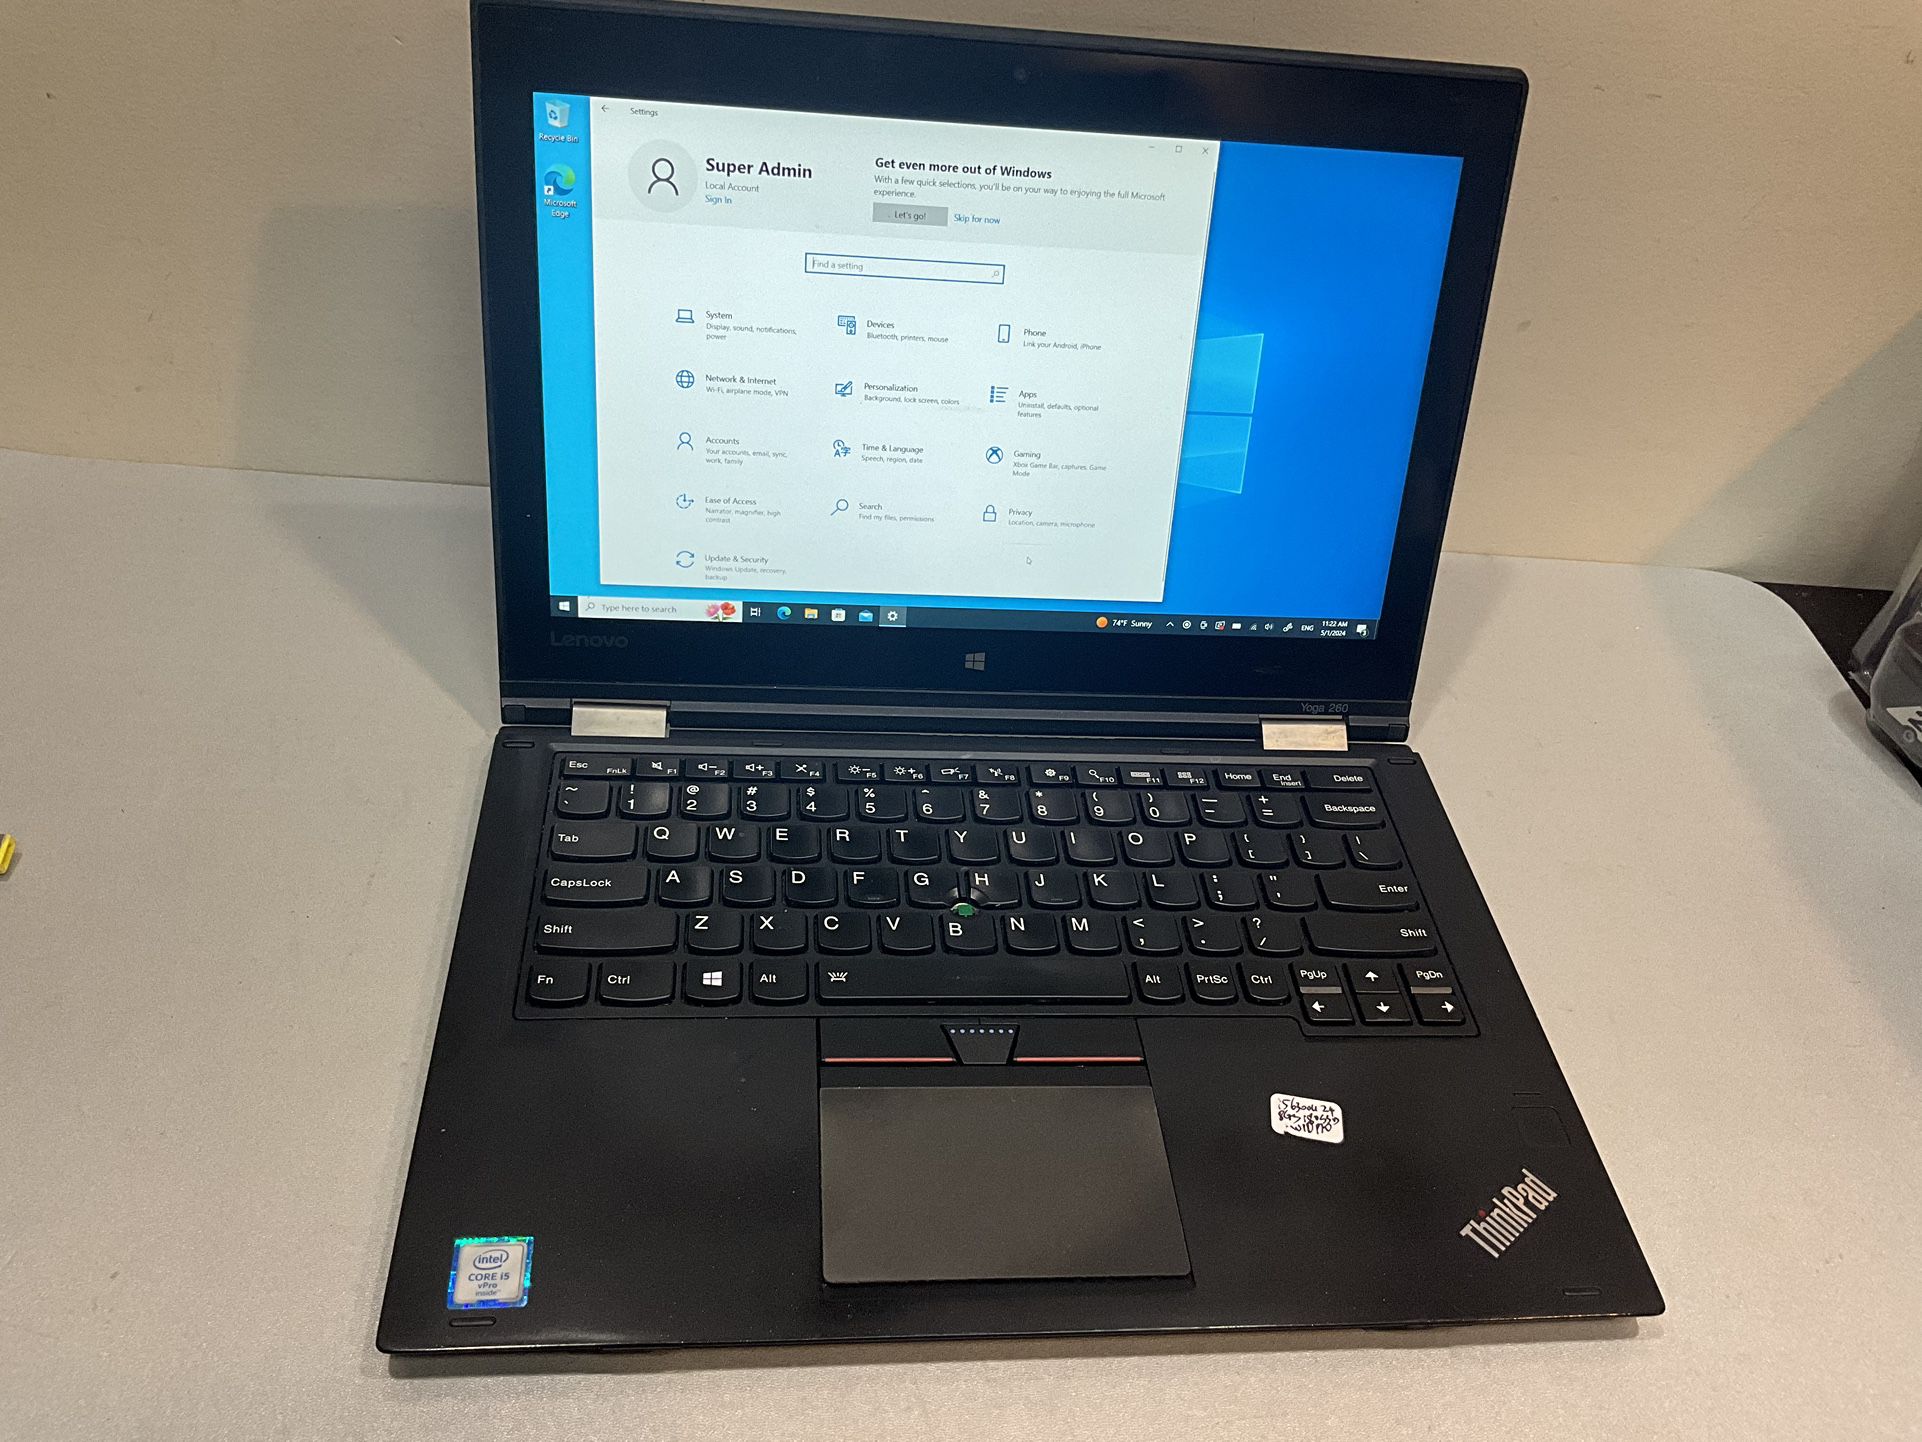 Lenovo ThinkPad Laptop Yoga 260 6th Gen i5 8GB 180GB  SSD Win10 Webcam touchscreen 